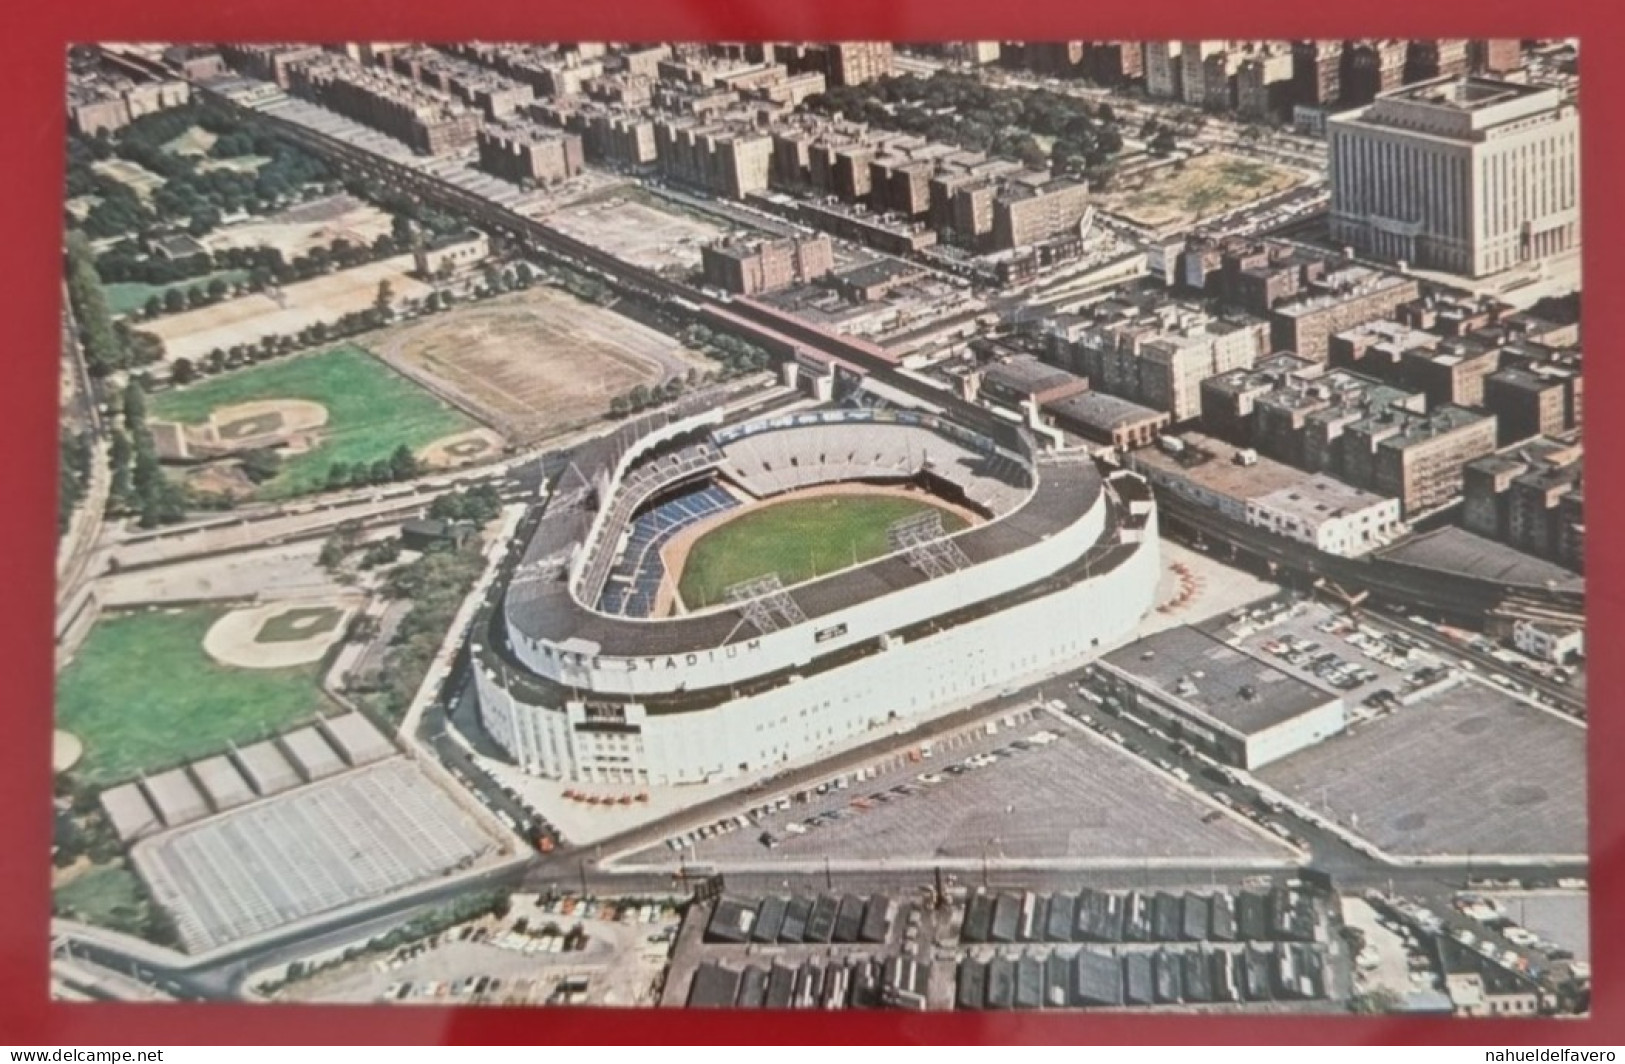 Uncirculated Postcard - USA - NY, NEW YORK CITY - AIR VIEW OF YANKEE STADIUM - Stadi & Strutture Sportive